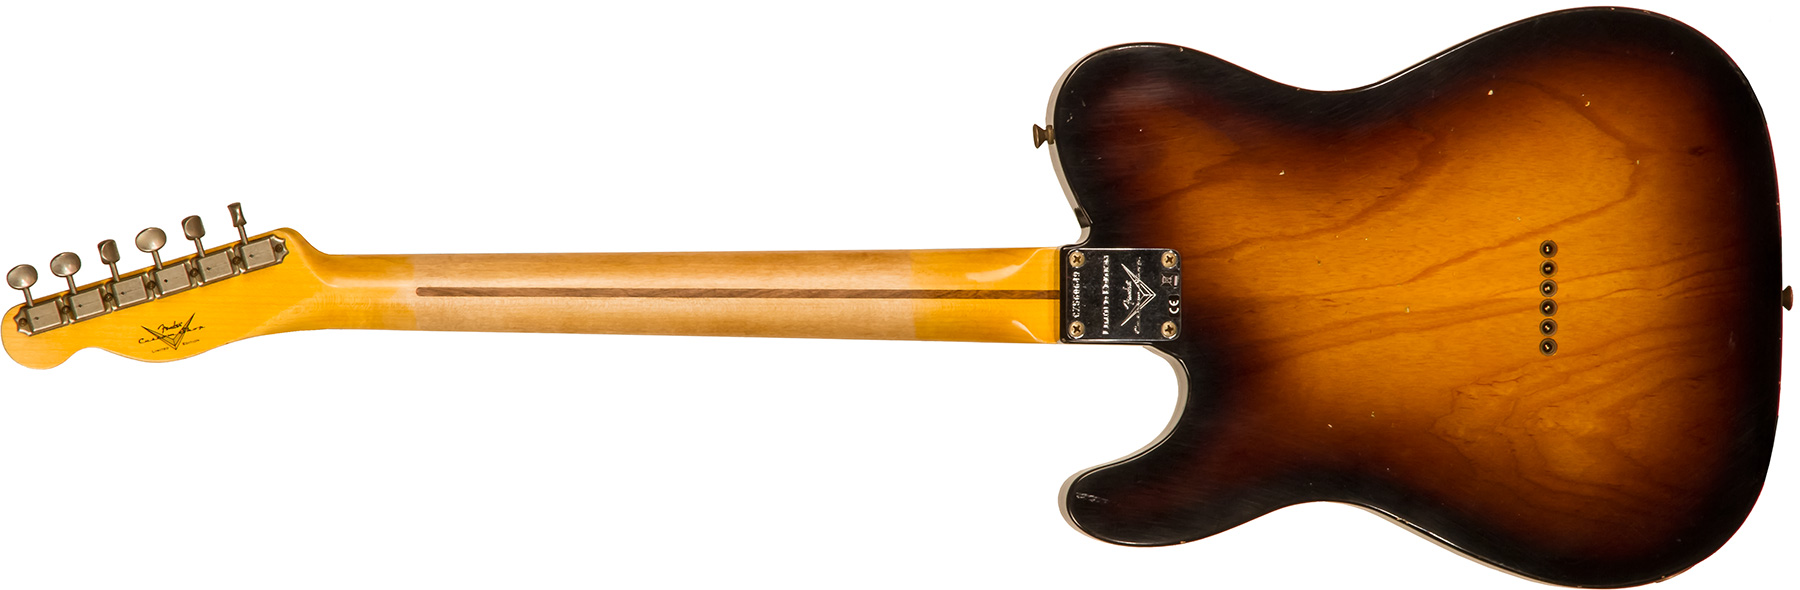 Fender Custom Shop Tele 1955 Ltd 2s Ht Mn #cz560649 - Relic Wide Fade 2-color Sunburst - Guitarra eléctrica con forma de tel - Variation 1